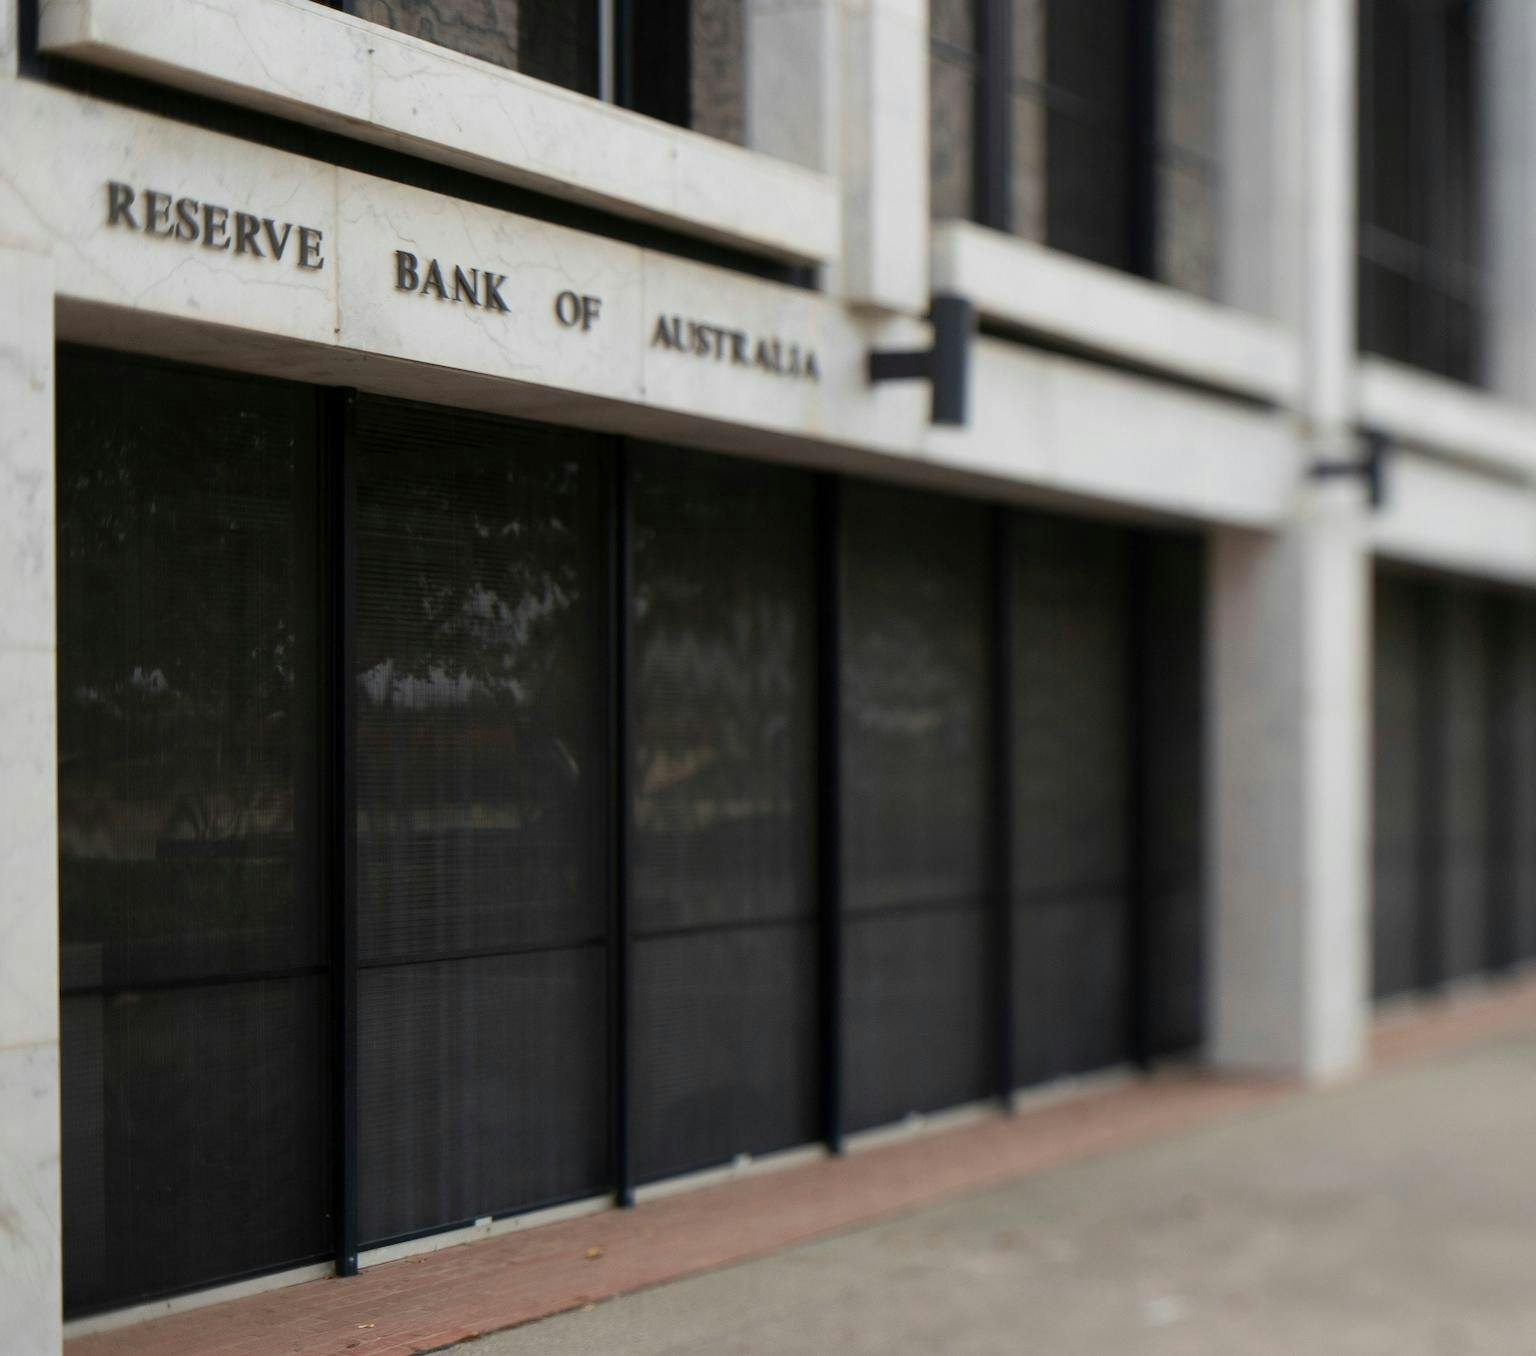 Reserve bank building front